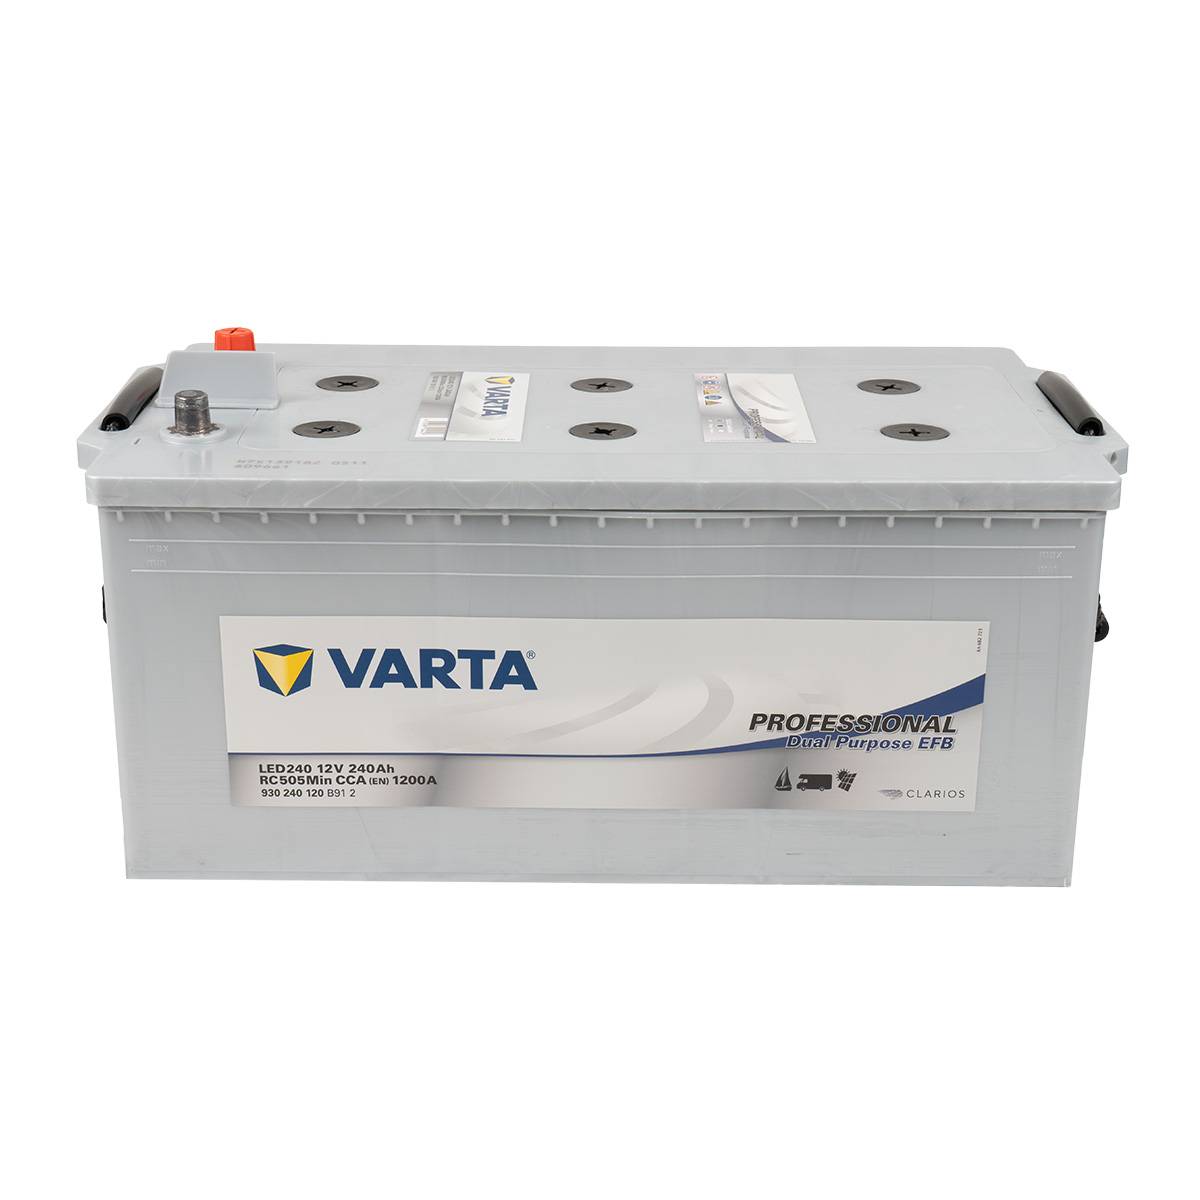 Varta LED240 Professional EFB 12V 240Ah 1200A 930 240 120, Supply batteries, Motorhomes & RV, Batteries by application